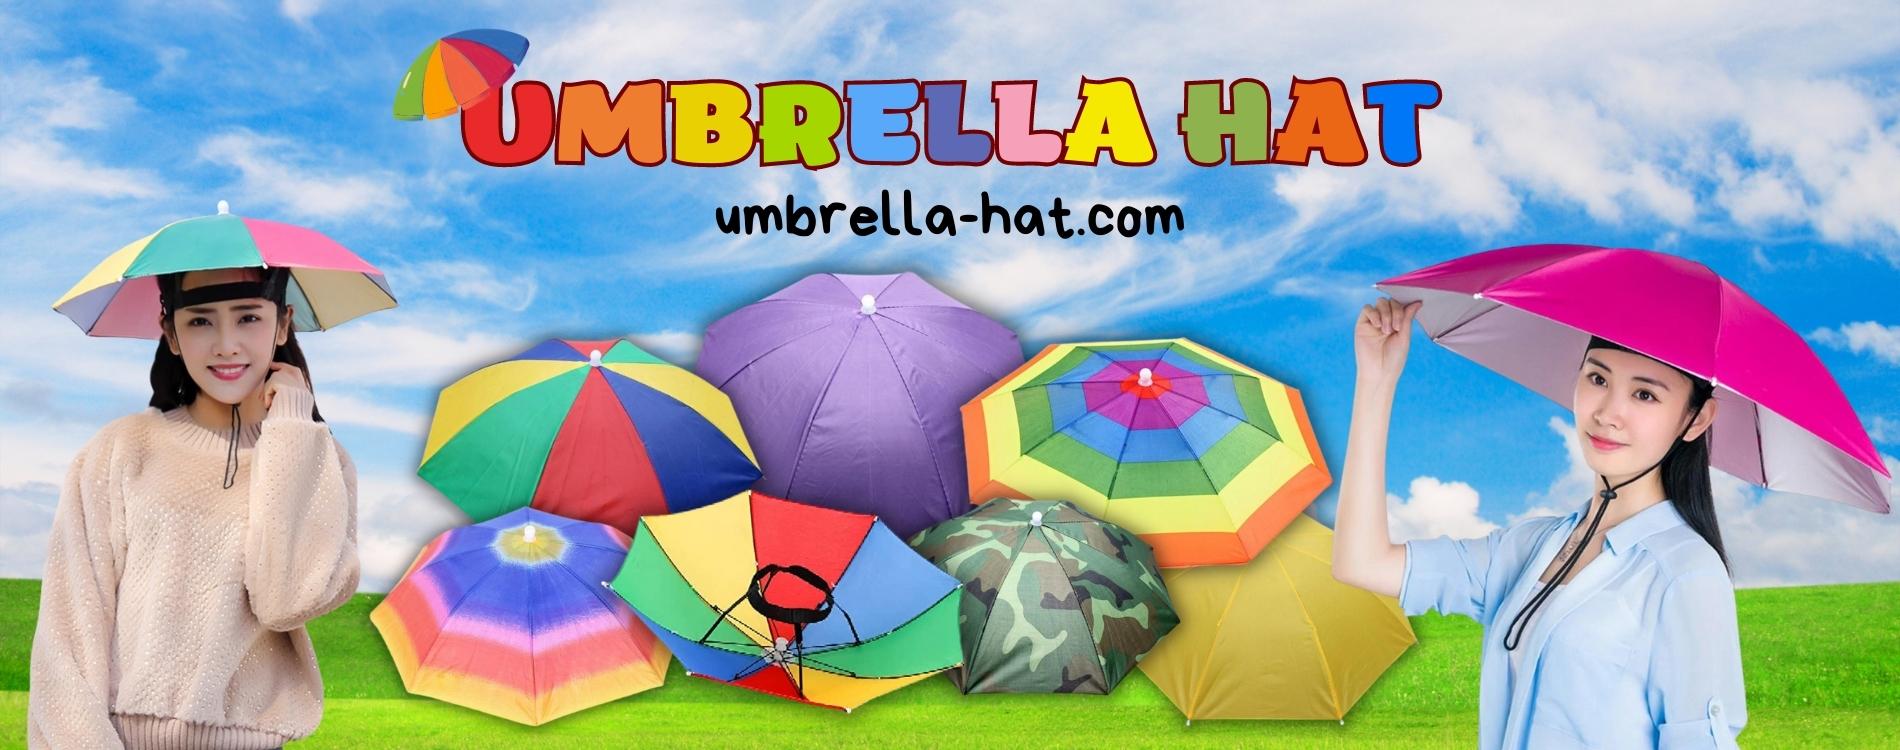 umbrella hat banner 2